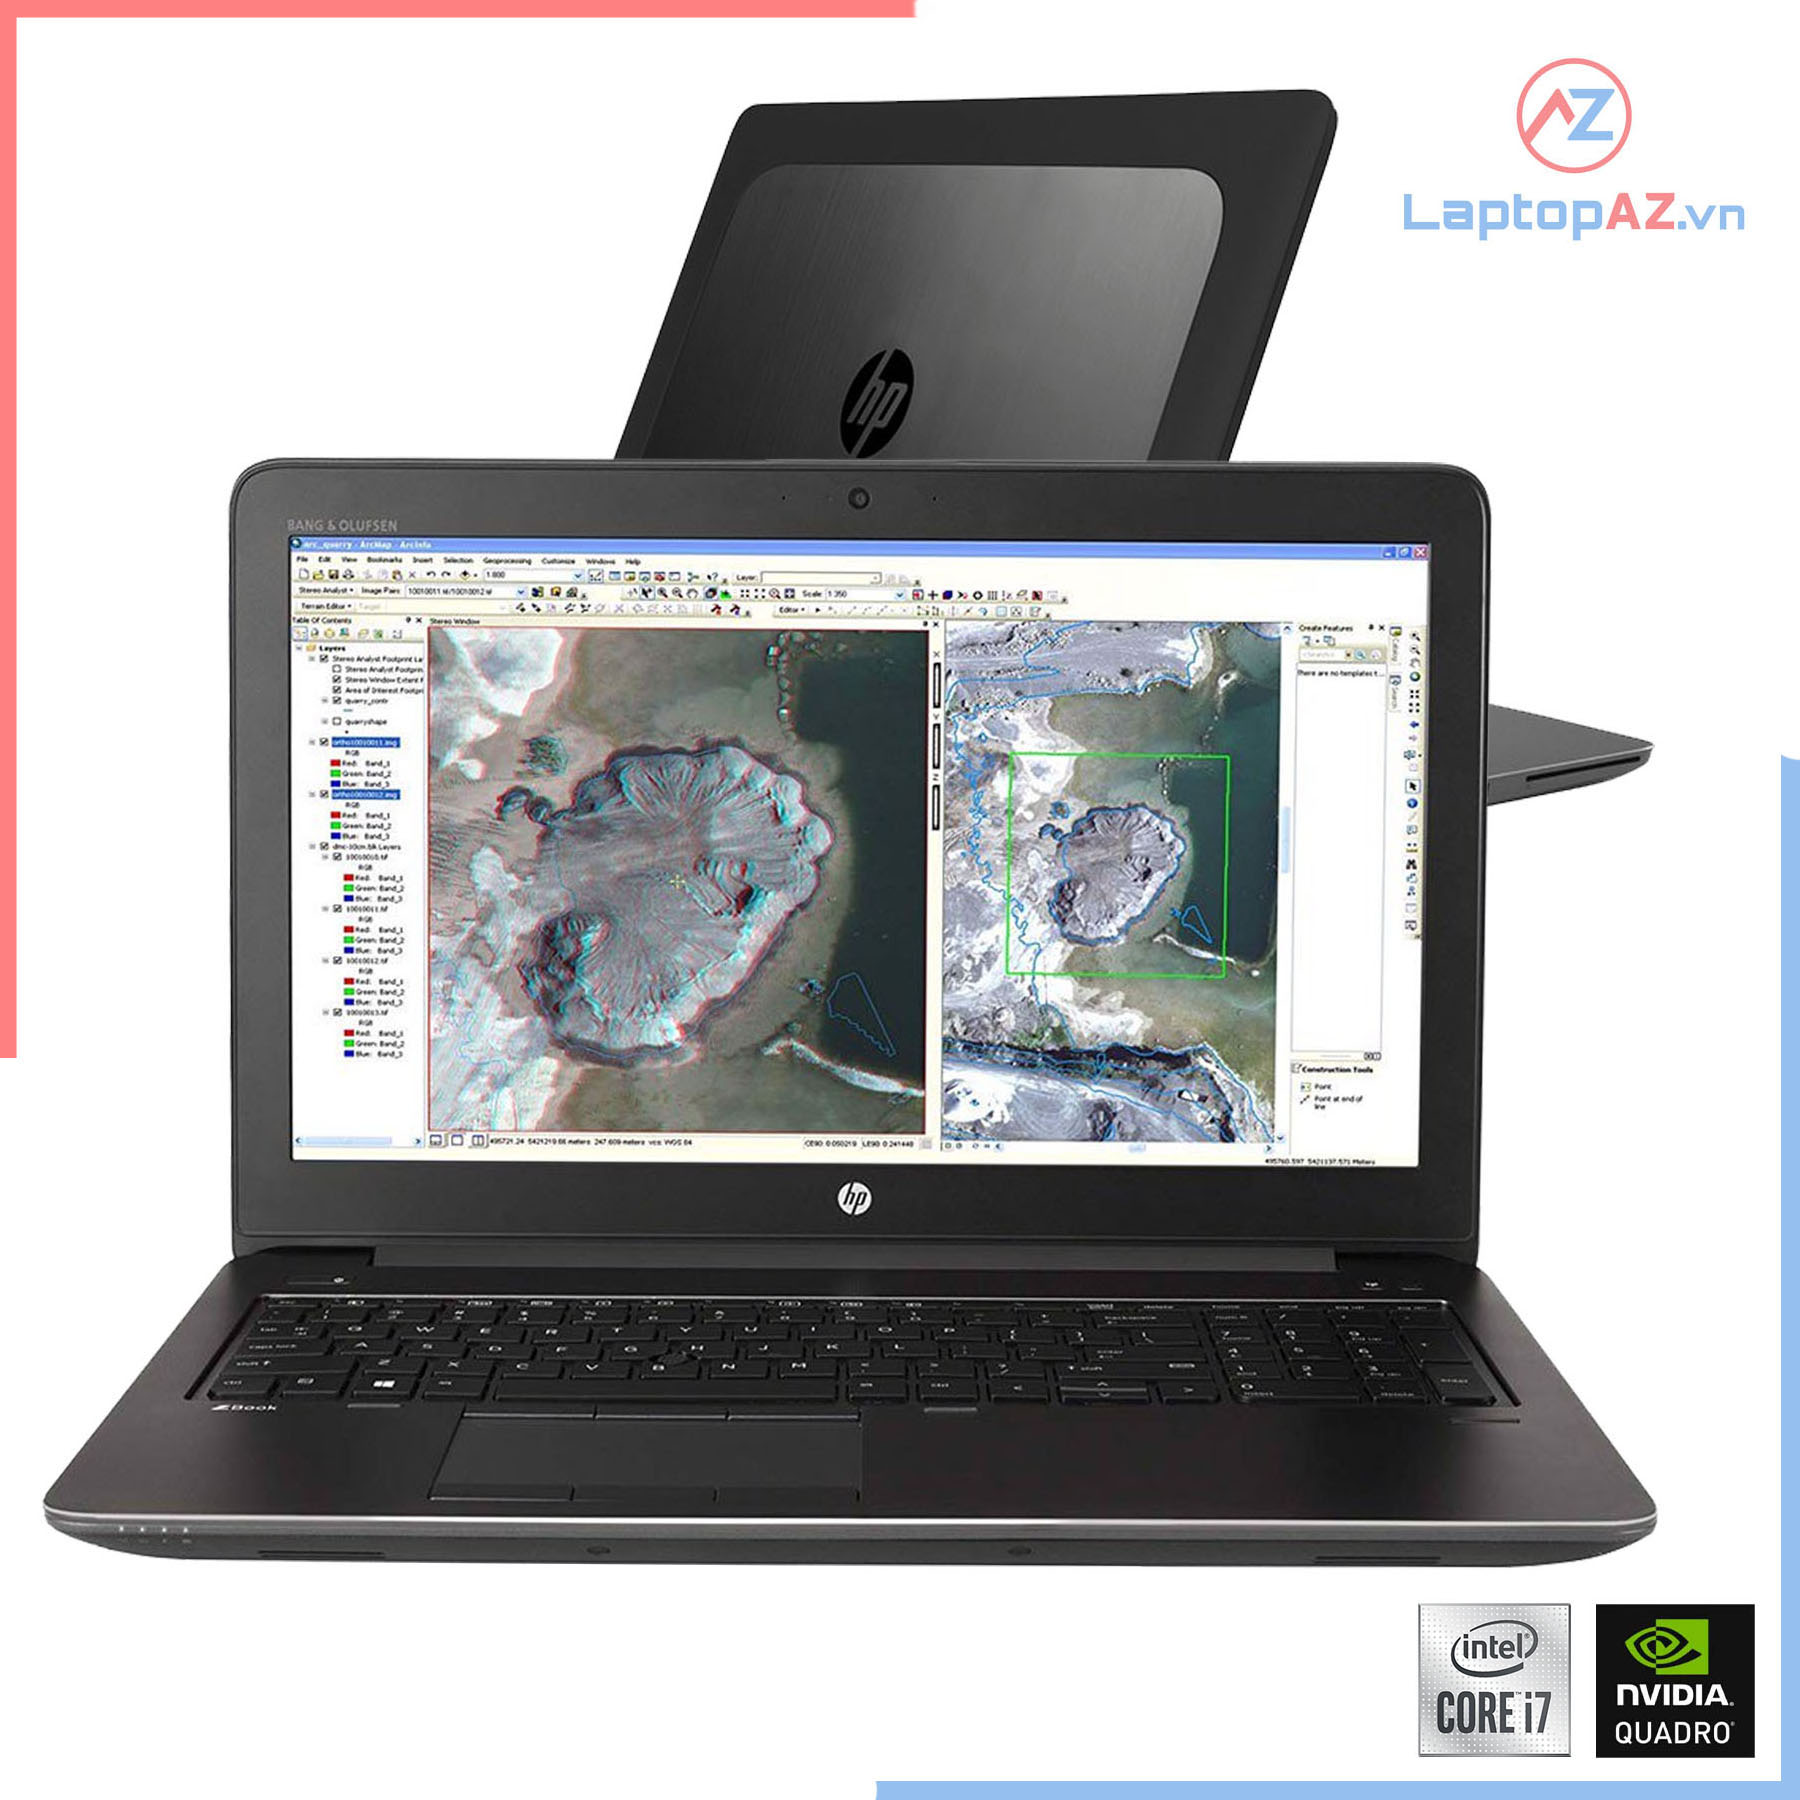 Laptop HP ZBook Studio G3 (Core i7-6700HQ, 16GB, 512GB, VGA 4GB NVIDIA Quadro M1000M, 15.6 inch FHD + IPS )